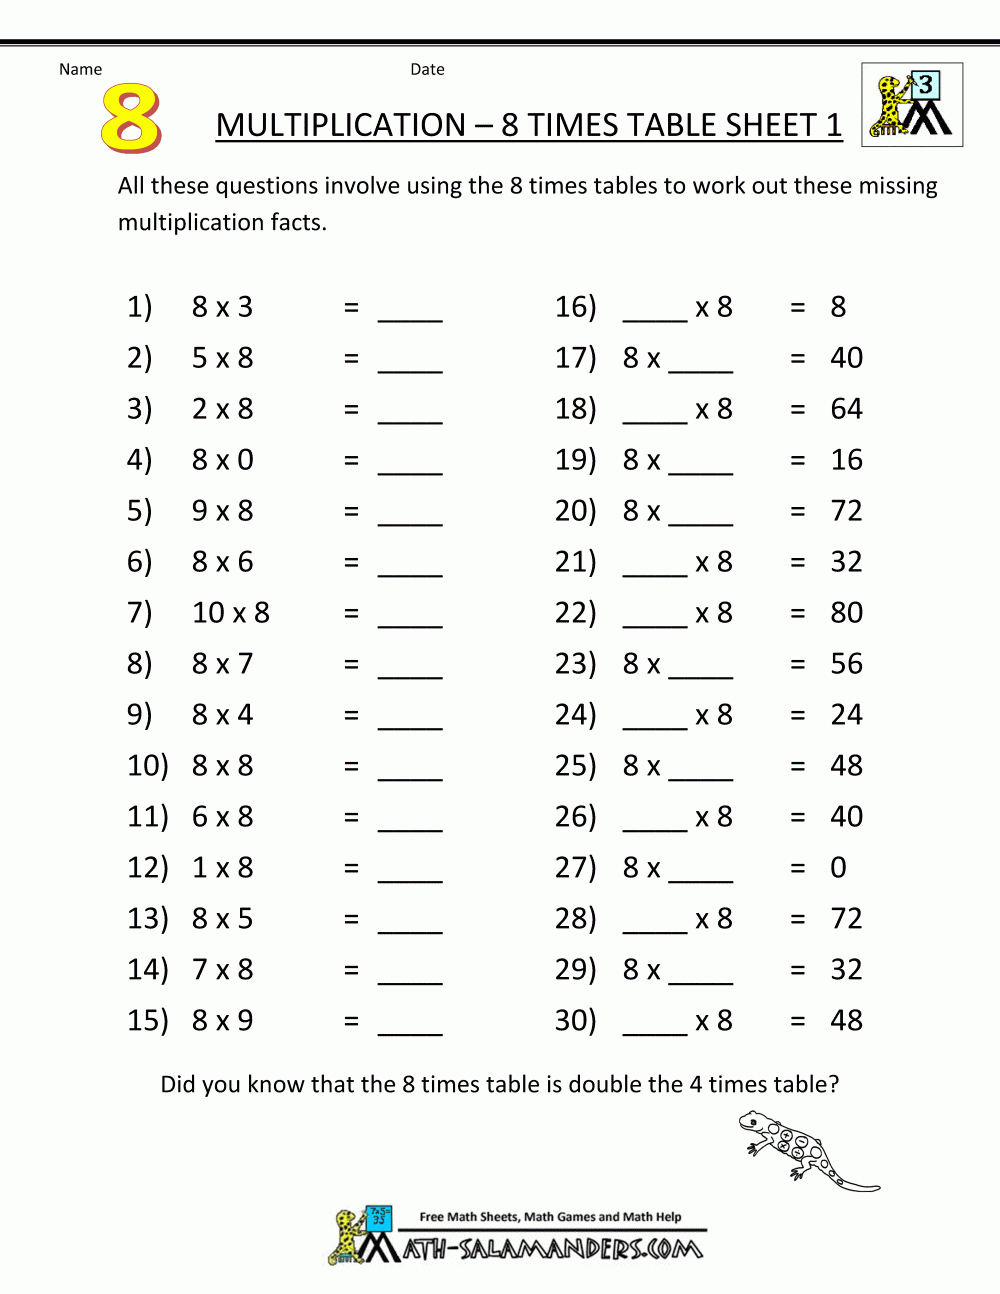 Multiplication Printable Worksheets 8 Times Table 1 within Multiplication Homework Printable